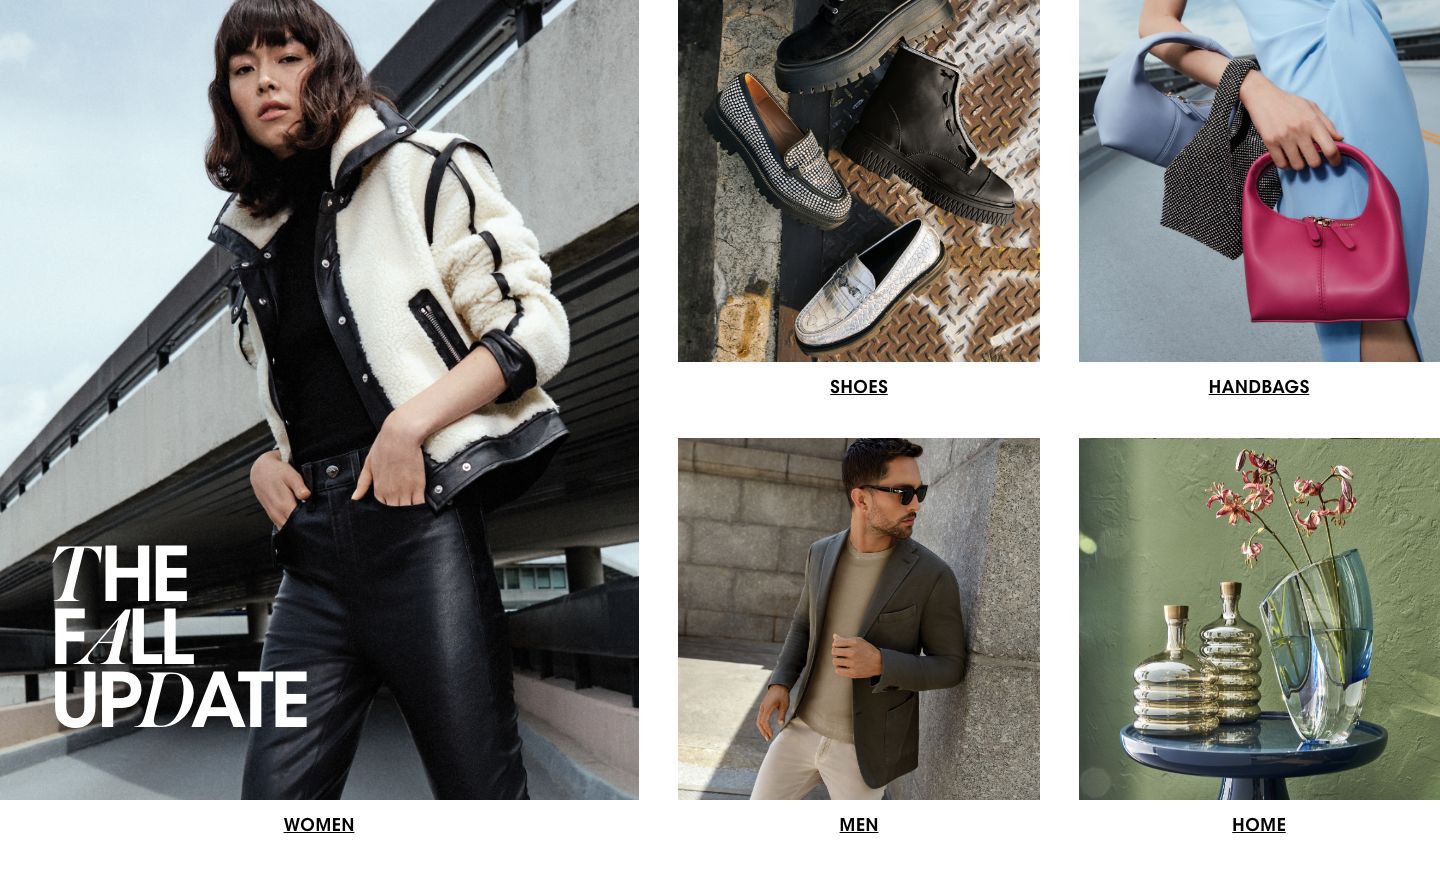 The fall update. Women. Shoes. Handbags. Men. Home.